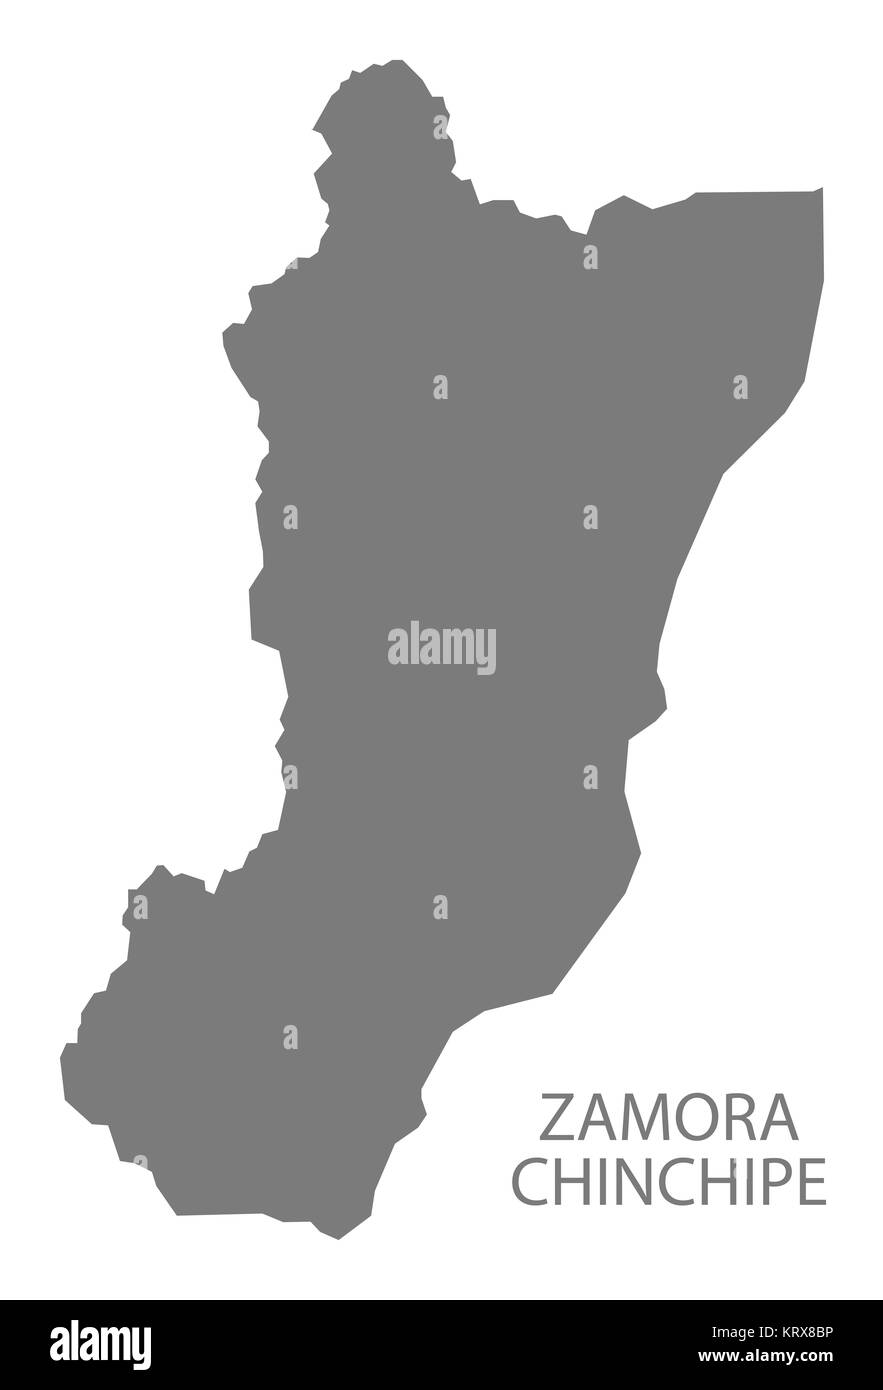 Zamora Chinchipe Ecuador Map grey Stock Photo